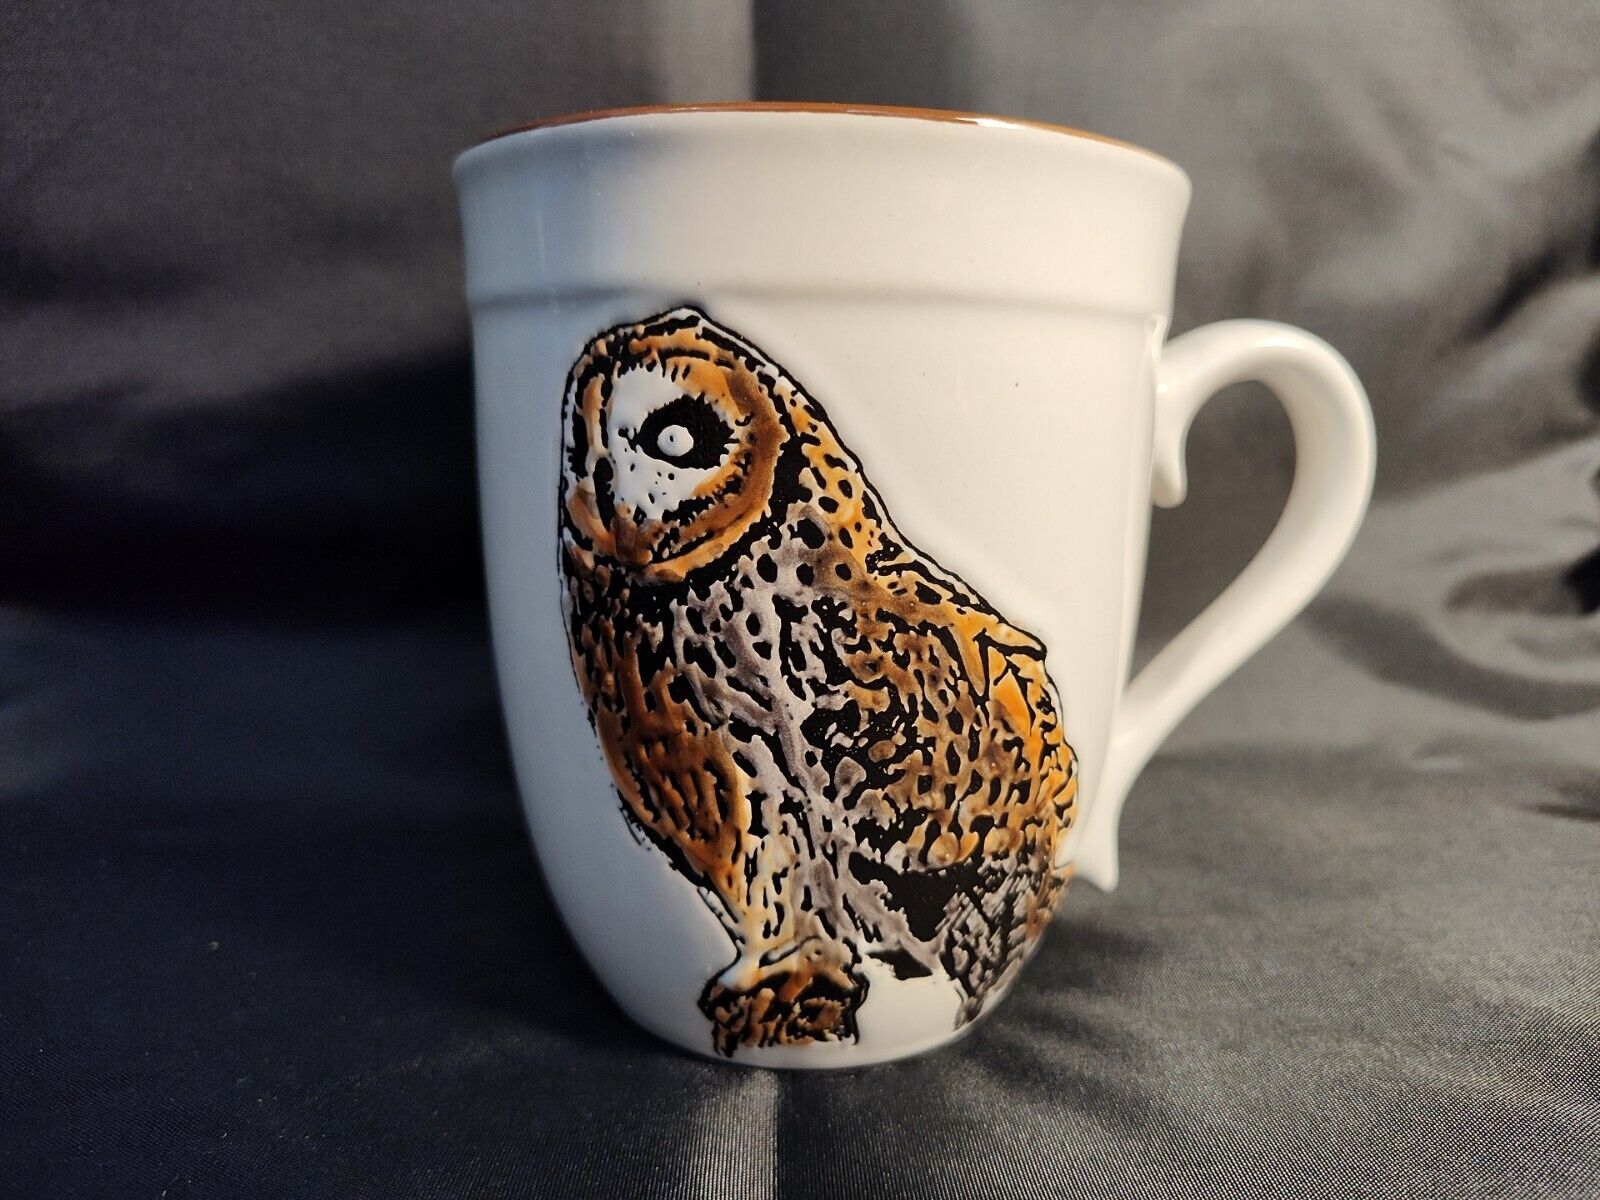 Spectrum Designz Owl Coffee Cup Tea Mug 2016 White Brown Excellent